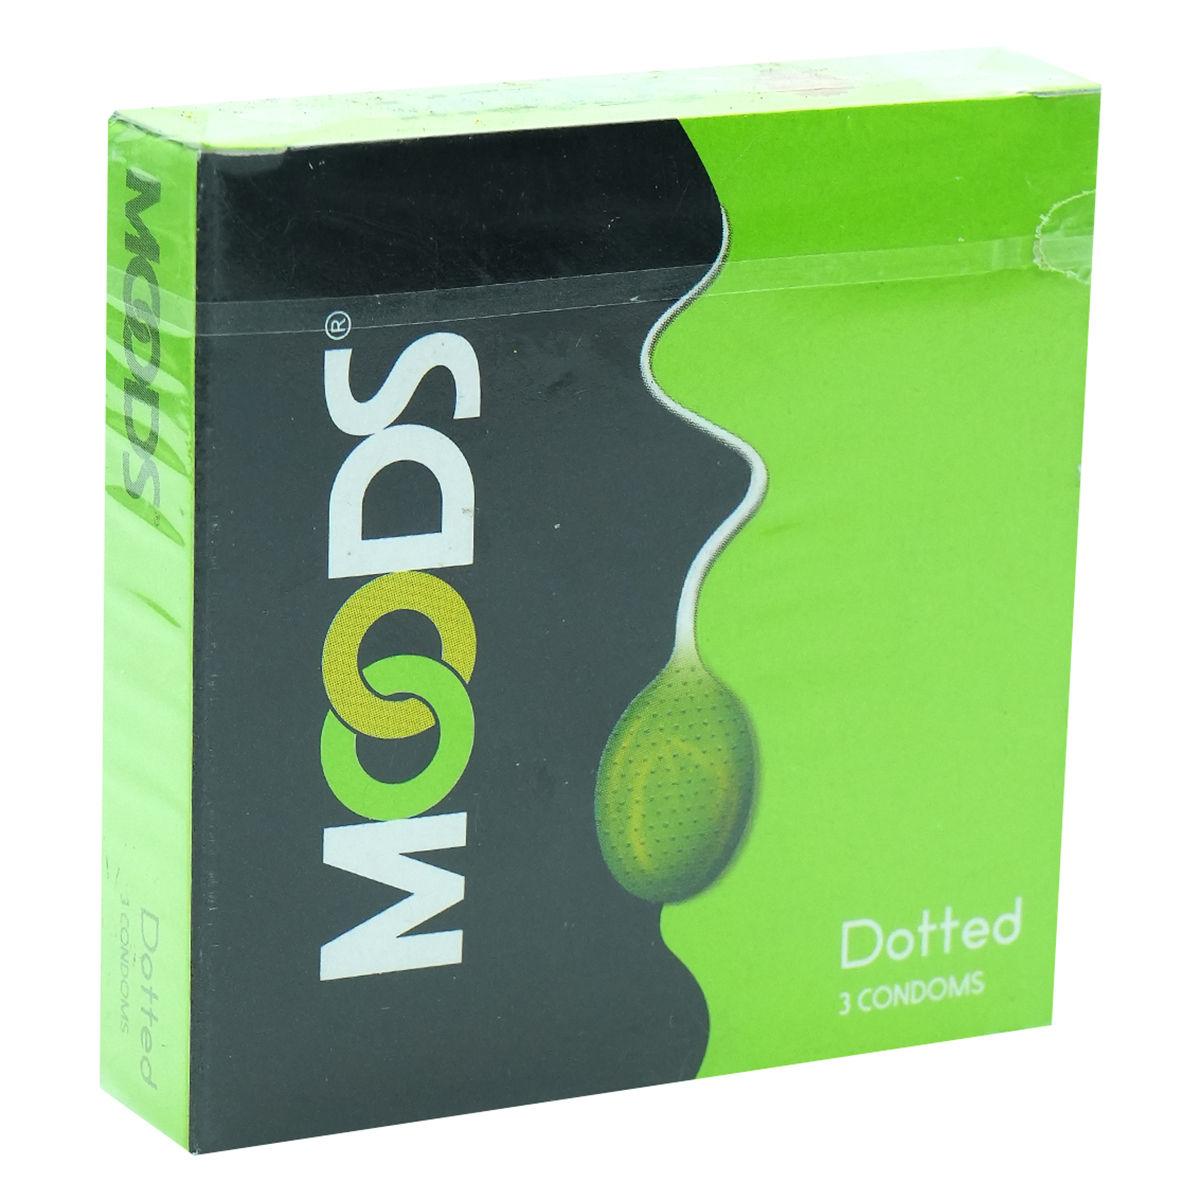 Buy Moods Dotted Condoms, 3 Count Online